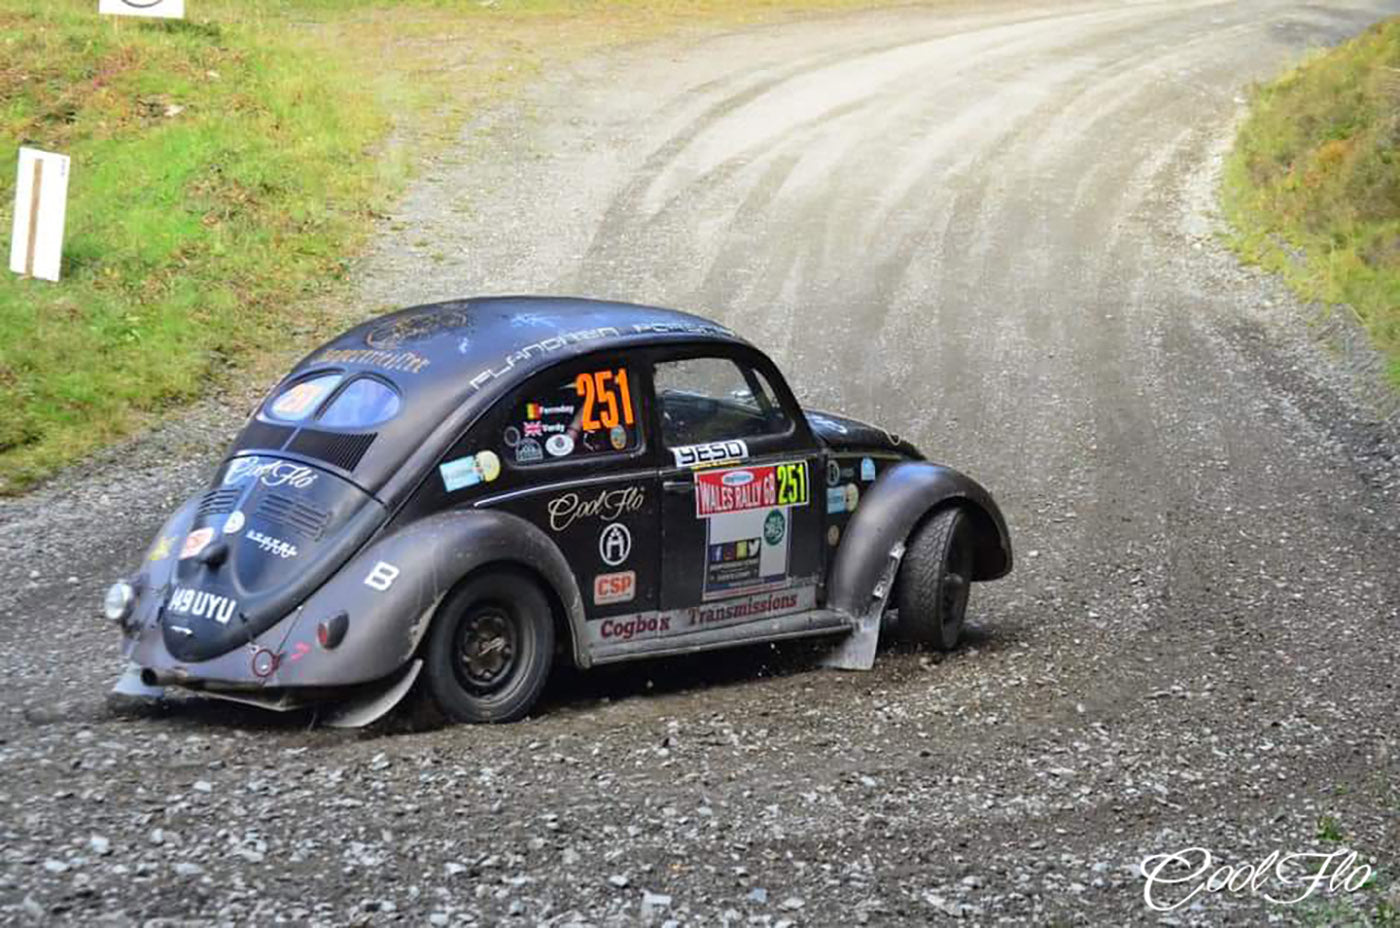 Welsh Rally GB 2018: Denzel Beetle / Cool Flo